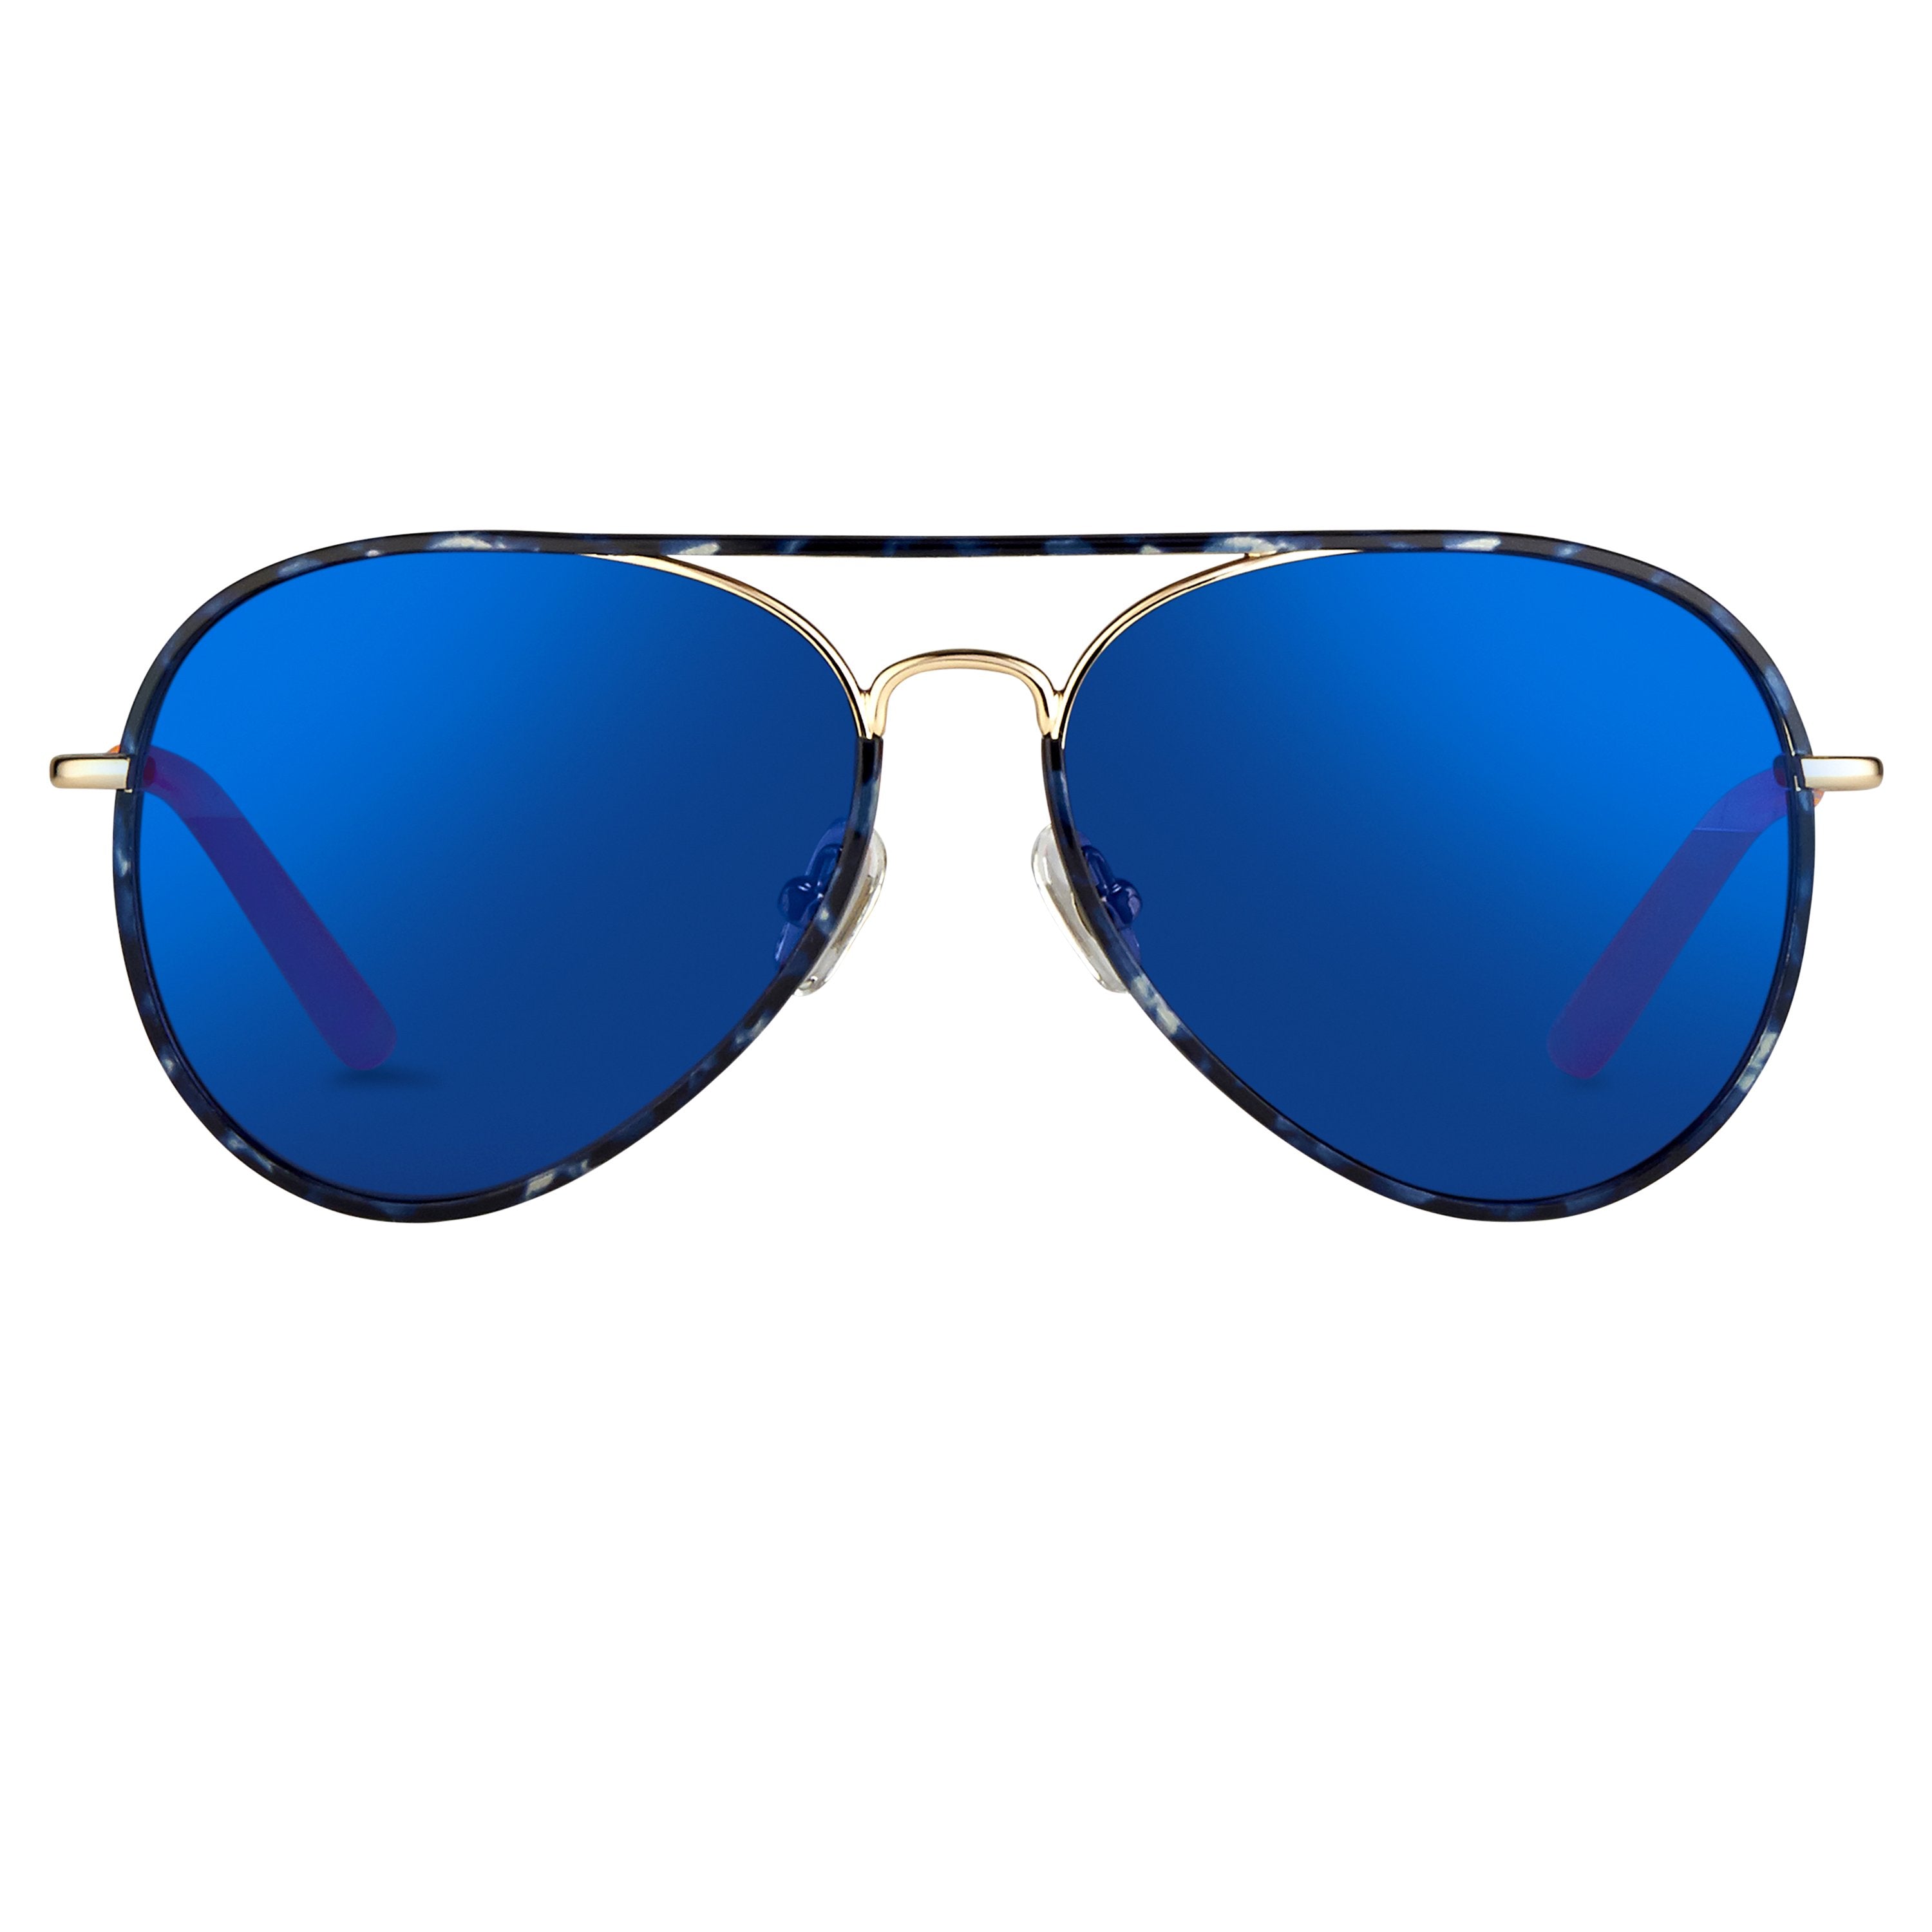 Color_MW154C3SUN - Matthew Williamson 154 C3 Aviator Sunglasses